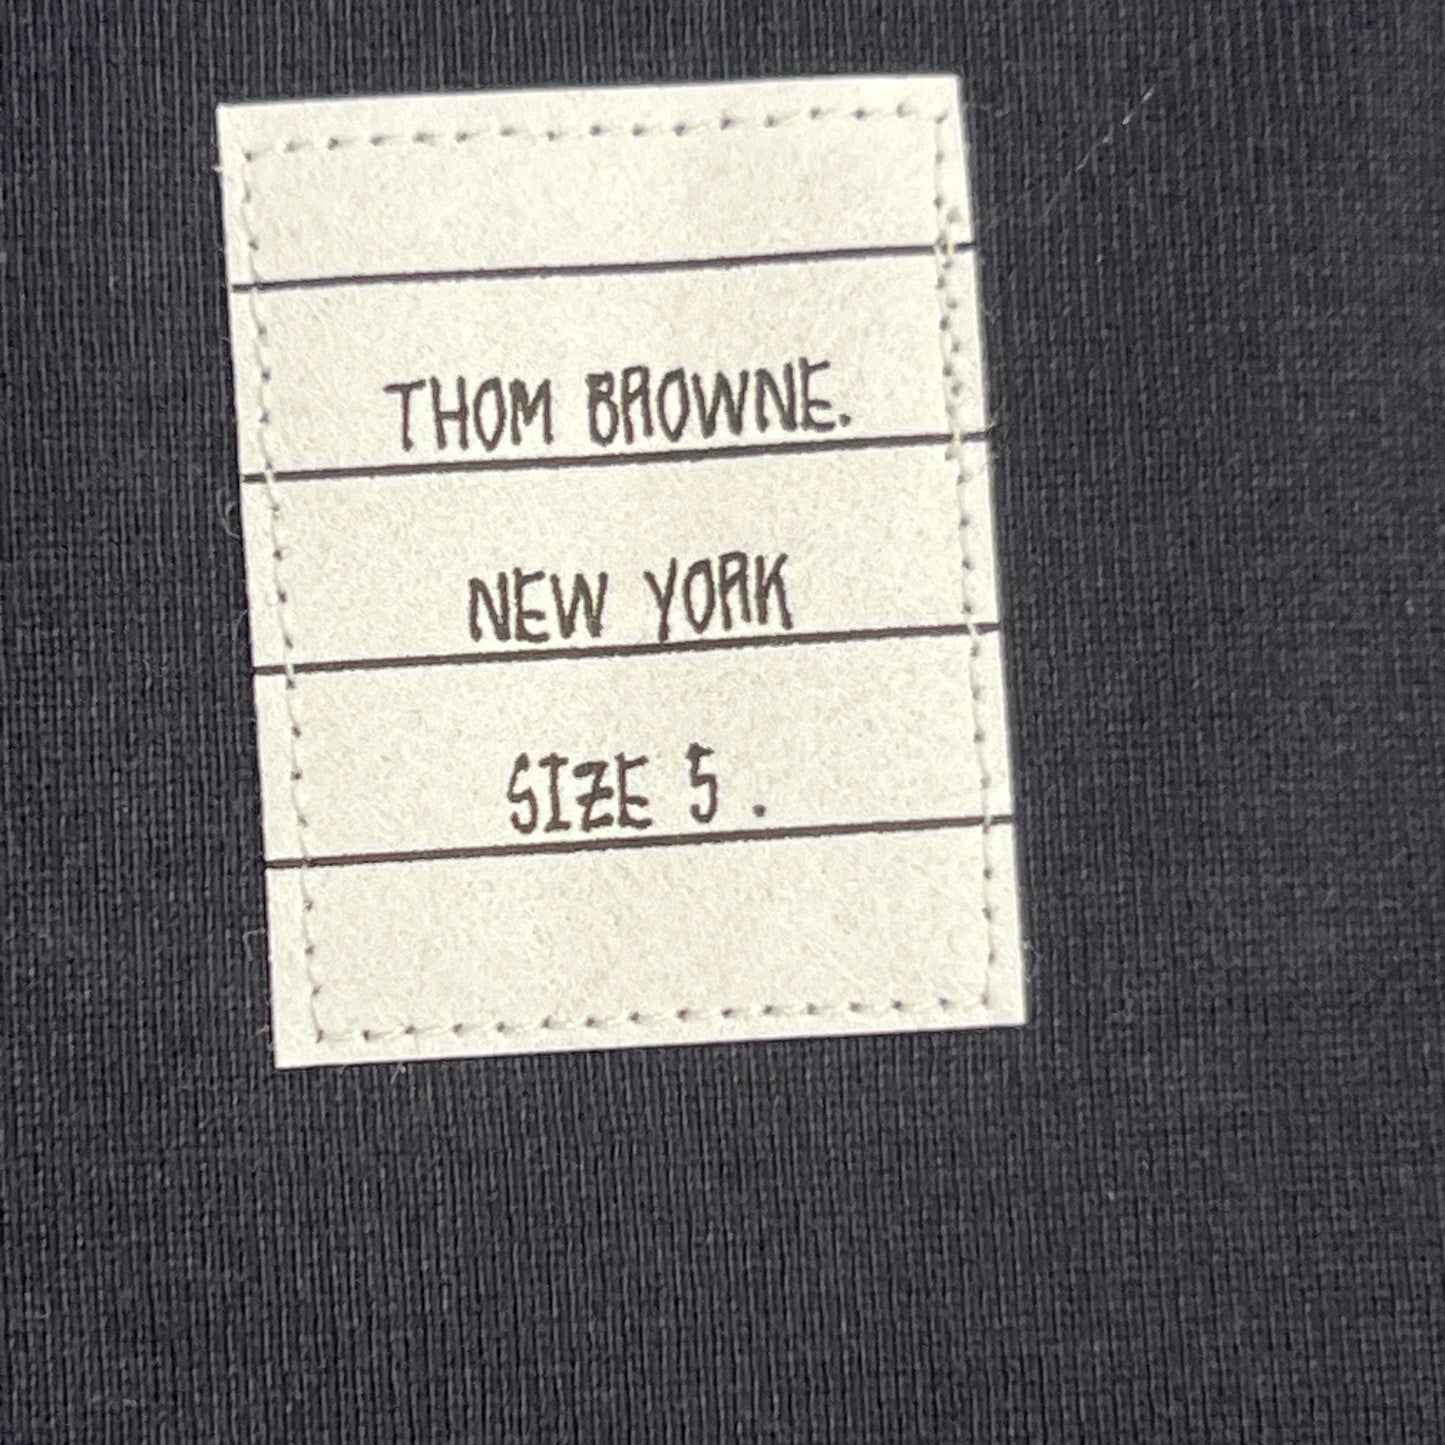 THOM BROWNE Short Sleeve RWB Pocket Tee in Medium Weight Jersey Cotton Navy Size 5(New)